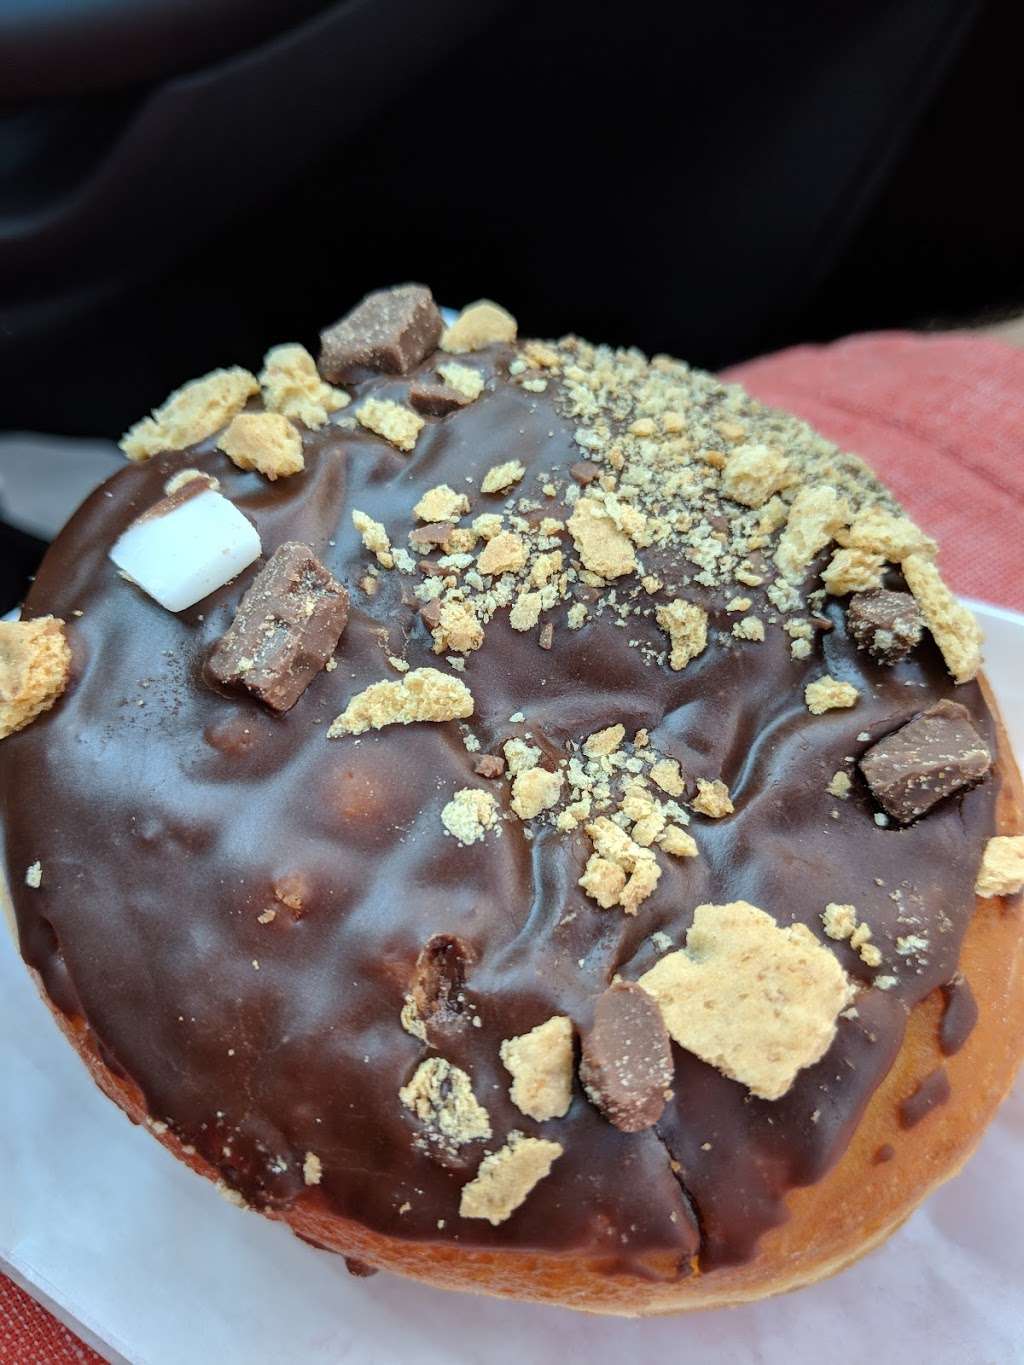 Dunkin Donuts | Shoppes at Waysons Corner, 5408 Southern Maryland Blvd, Lothian, MD 20711 | Phone: (410) 741-1607